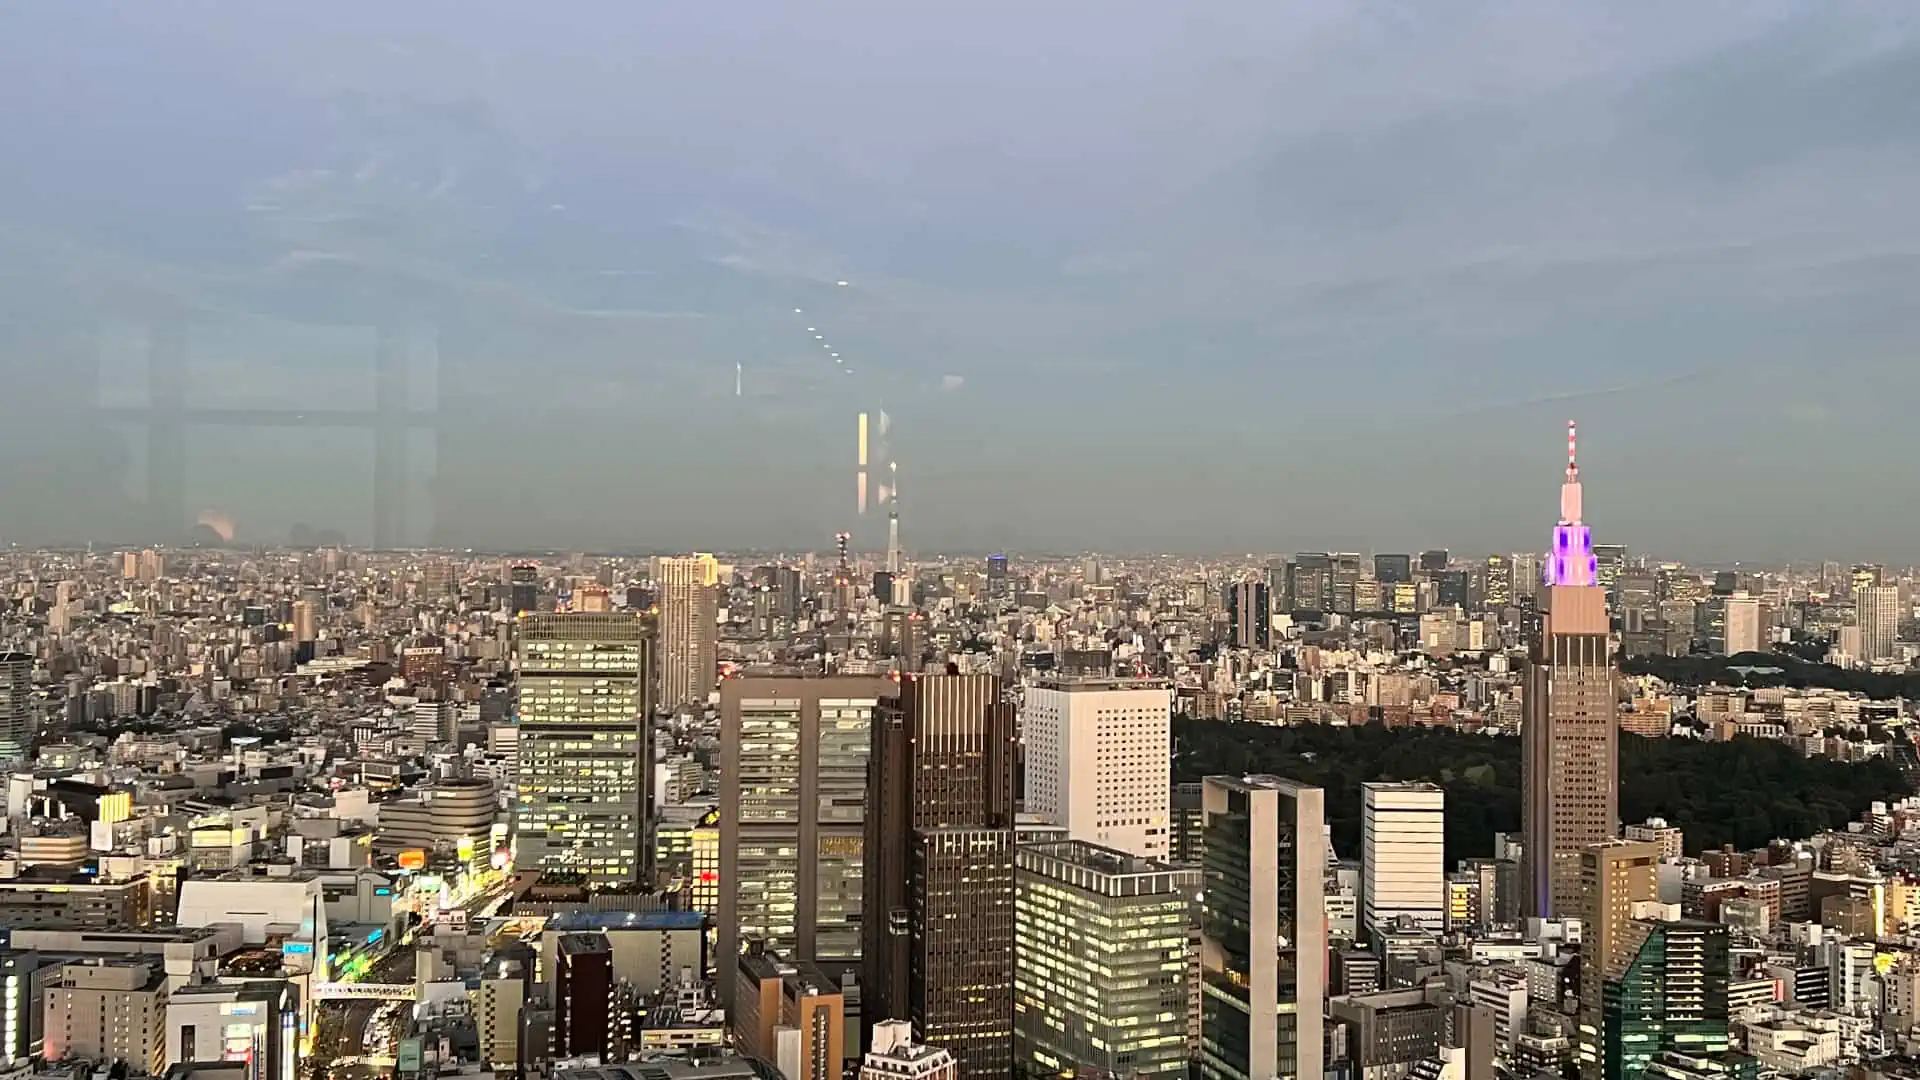 Skyline view of Shibuya from New York Bar at dusk